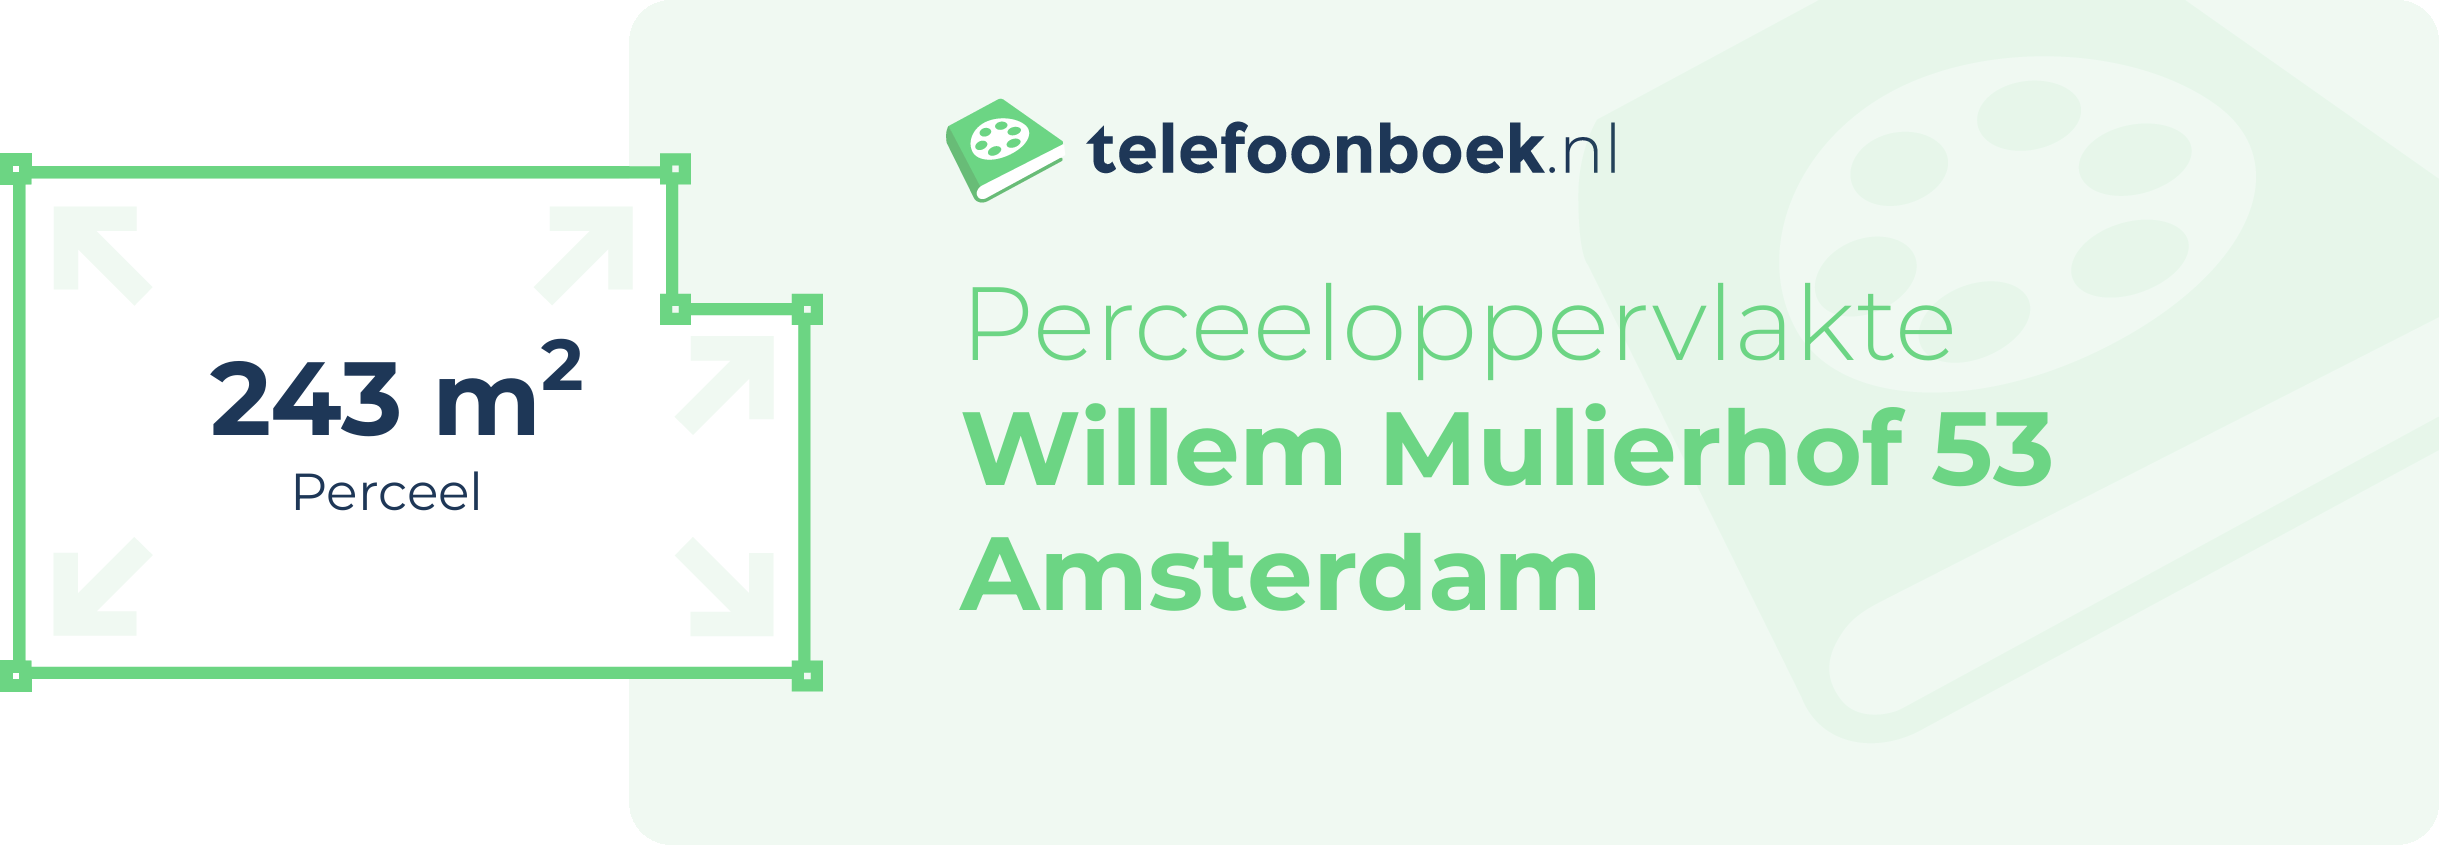 Perceeloppervlakte Willem Mulierhof 53 Amsterdam